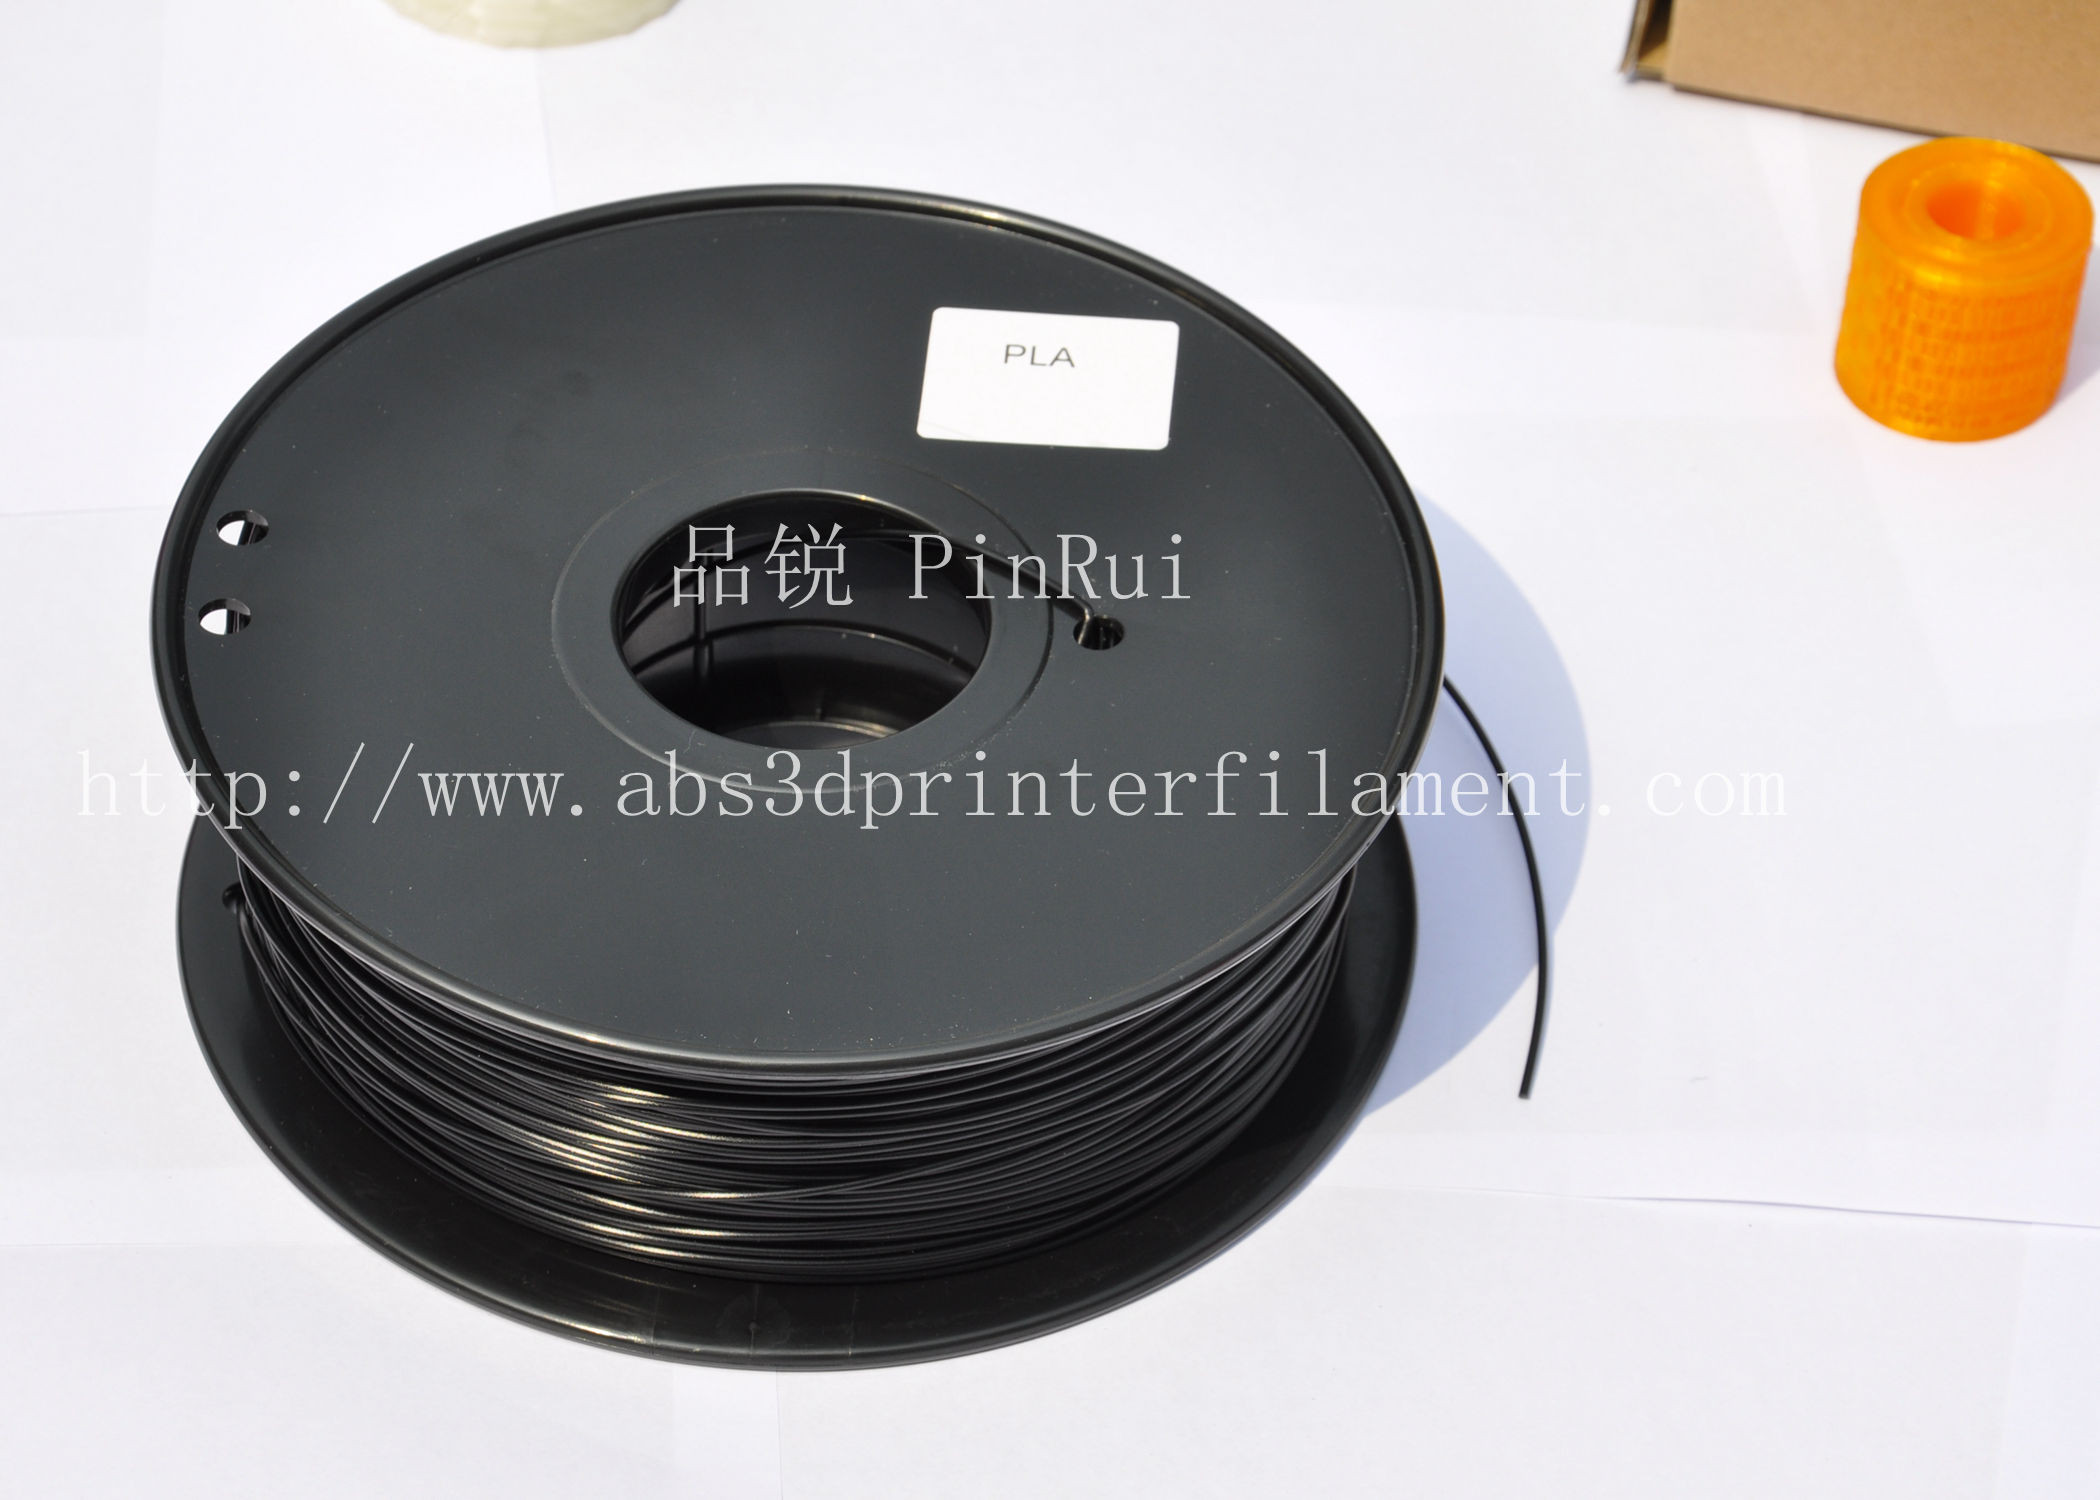 China Black PLA 3d Printer Filament 1.75mm / 3.0mm 1.0 KG / Roll factory